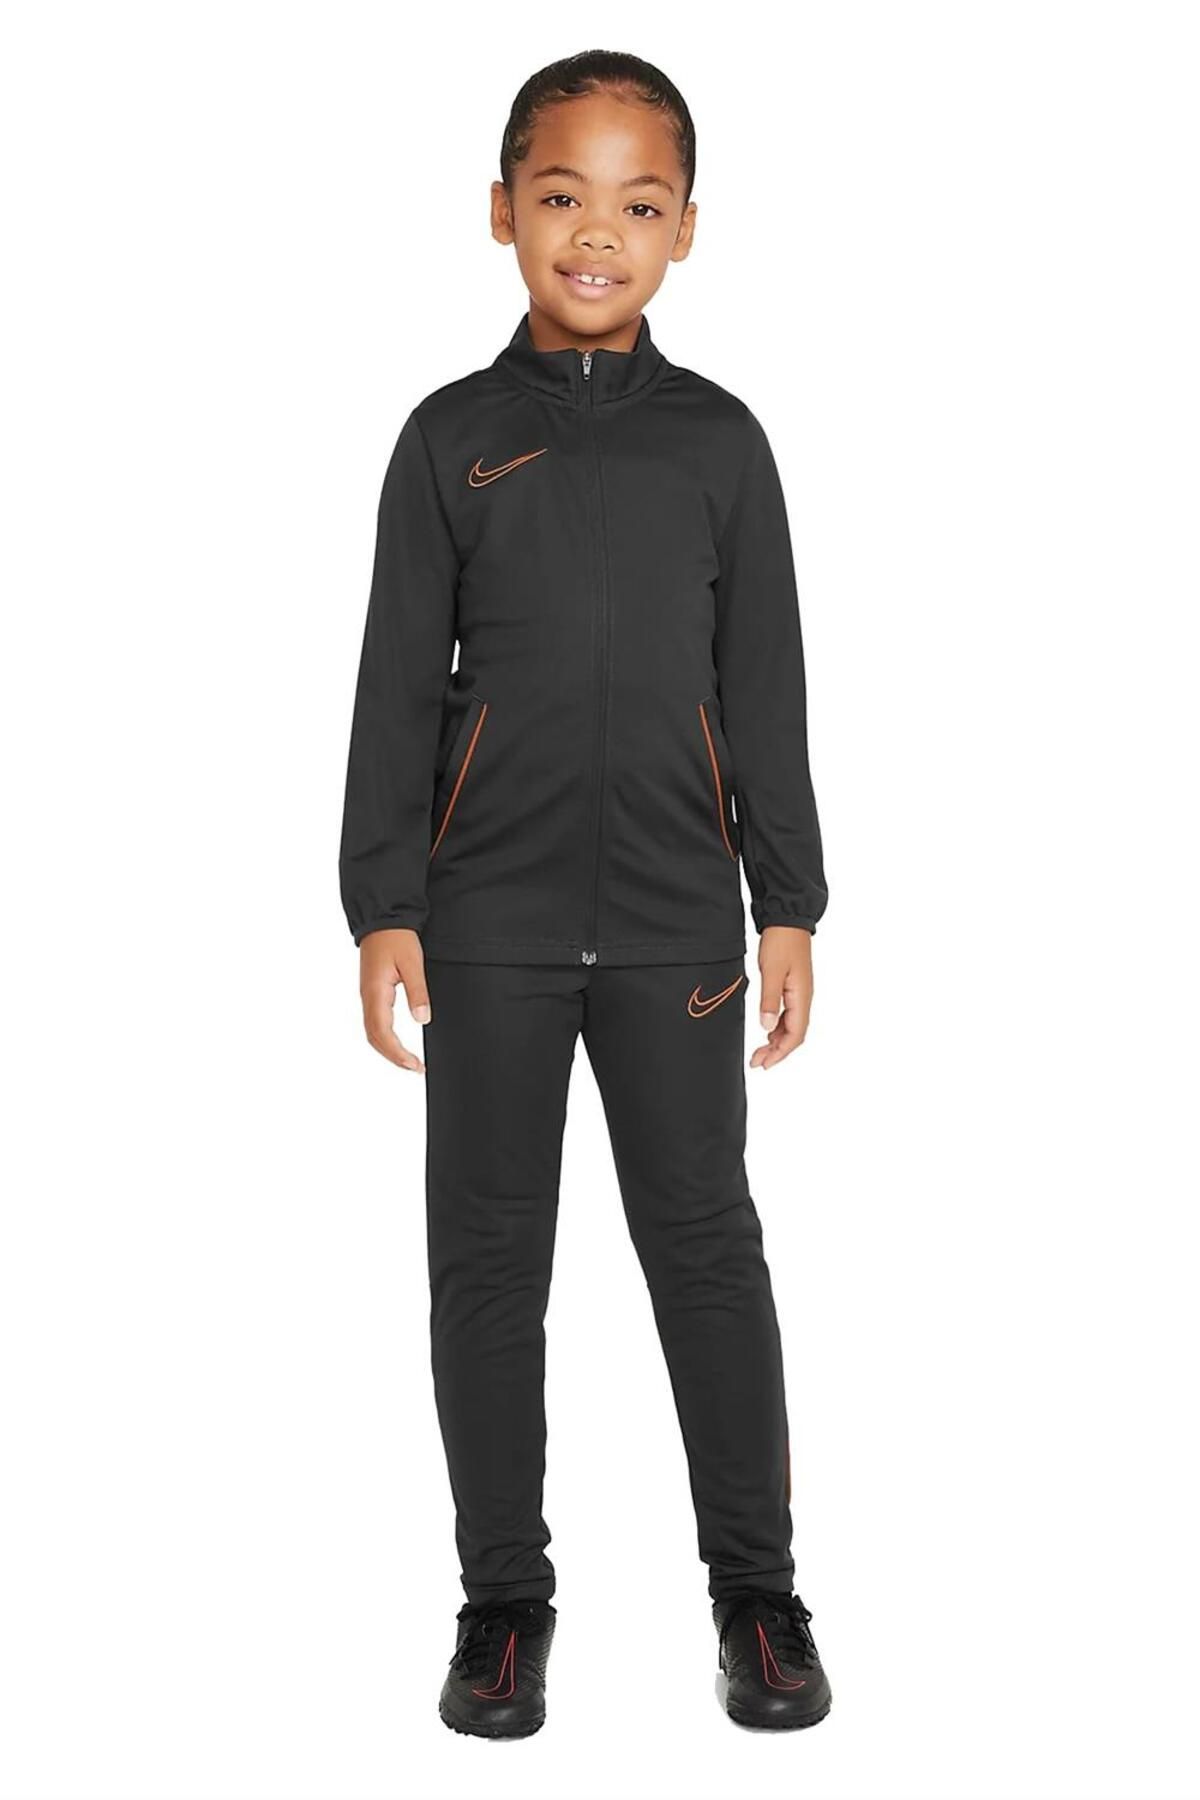 Nike Academy 21 Track Suit Knit Çocuk Eşofman Takımı Cw6133-070